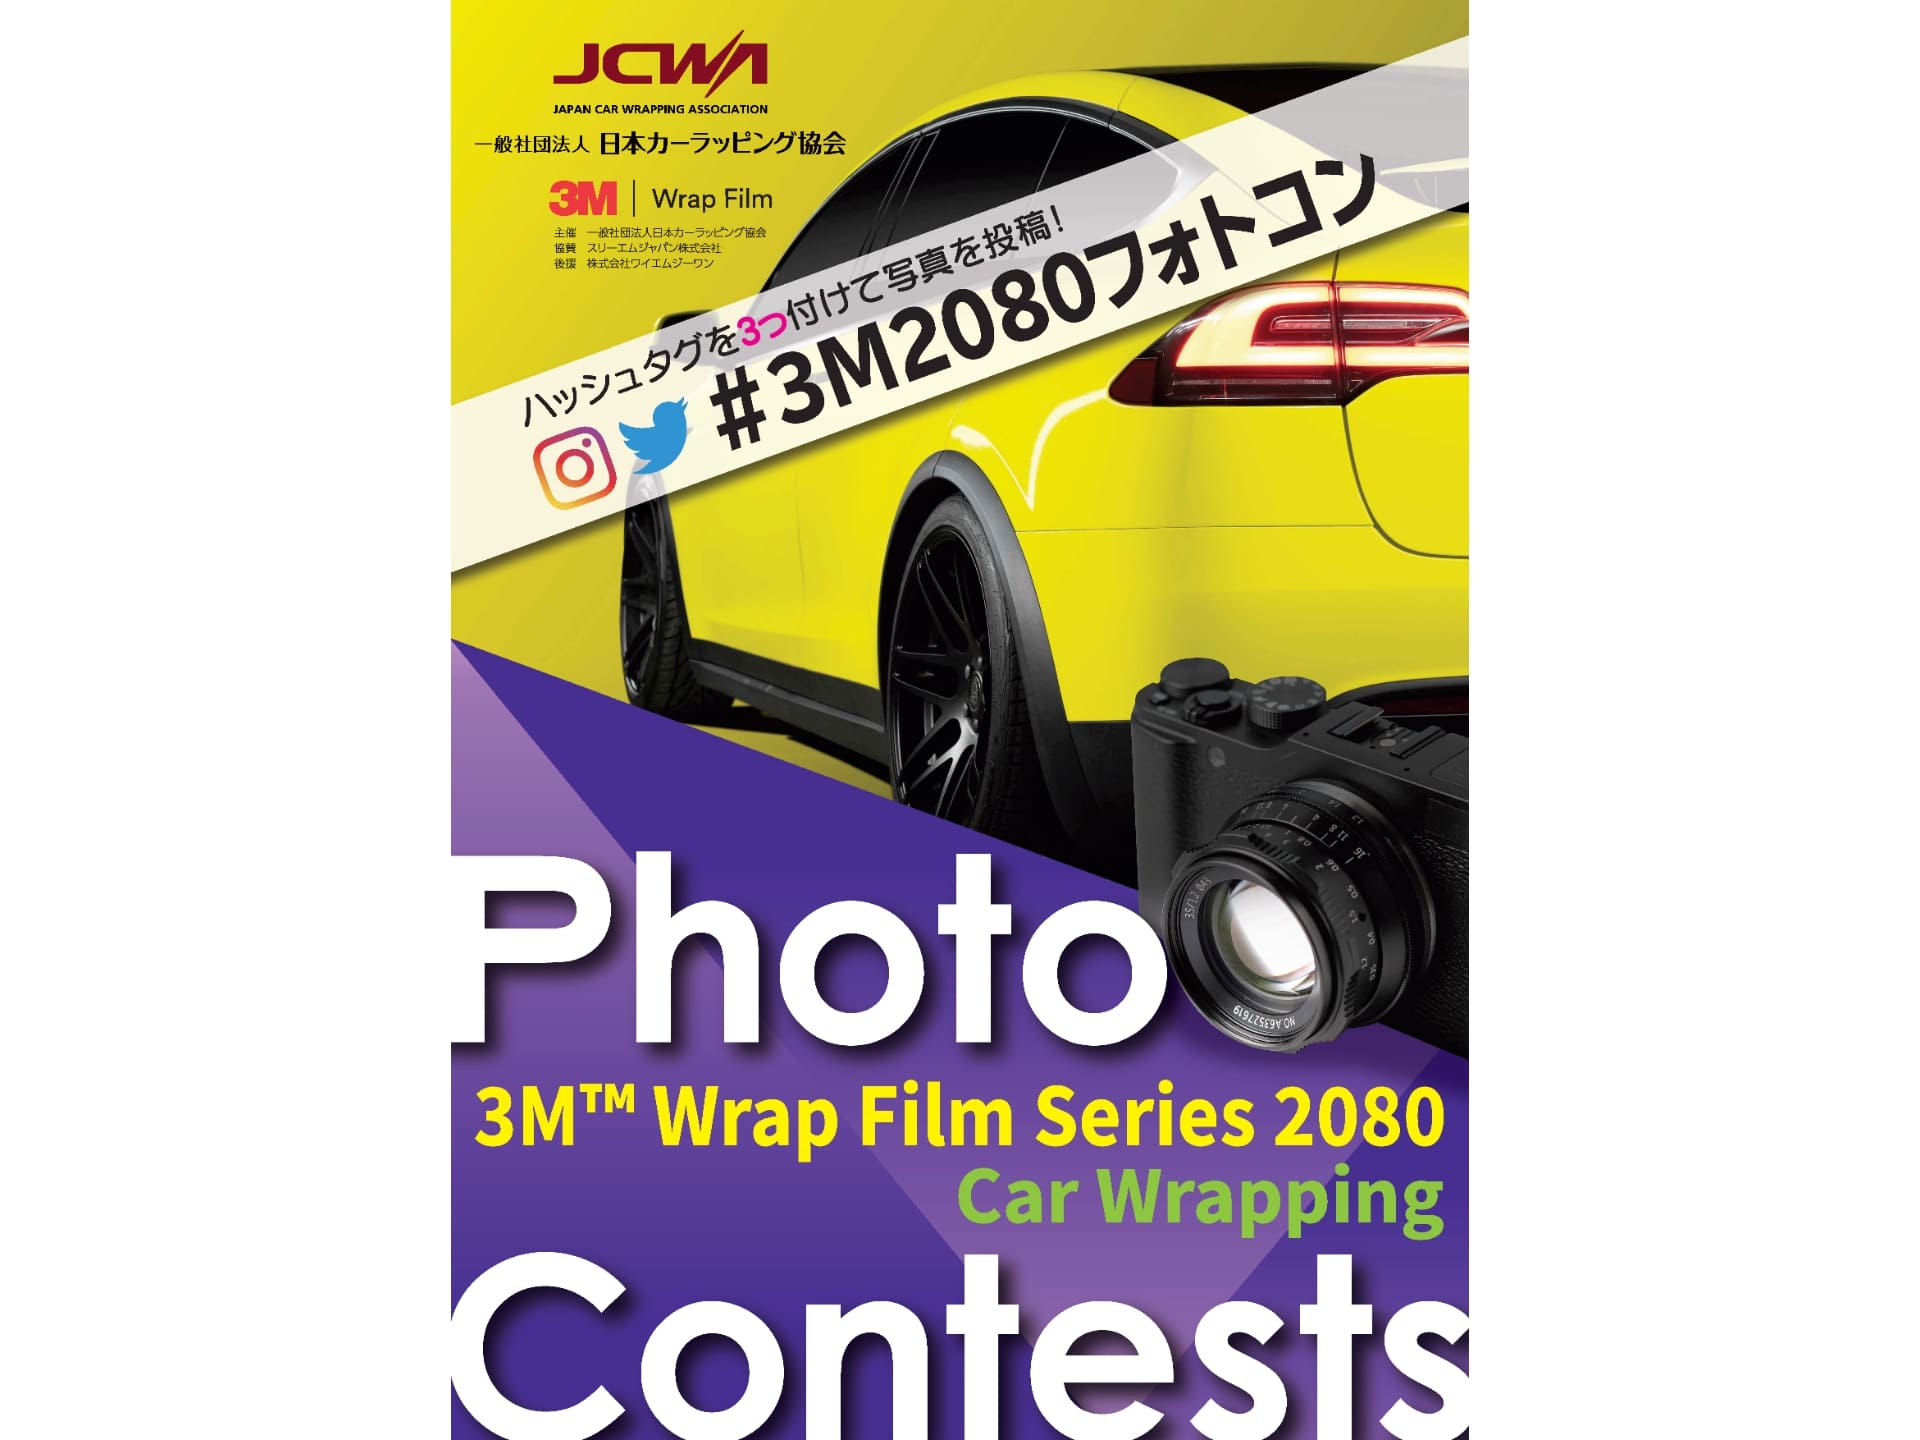 「3M Wrap Film Series 2080 フォトコンテスト」告知ポスター